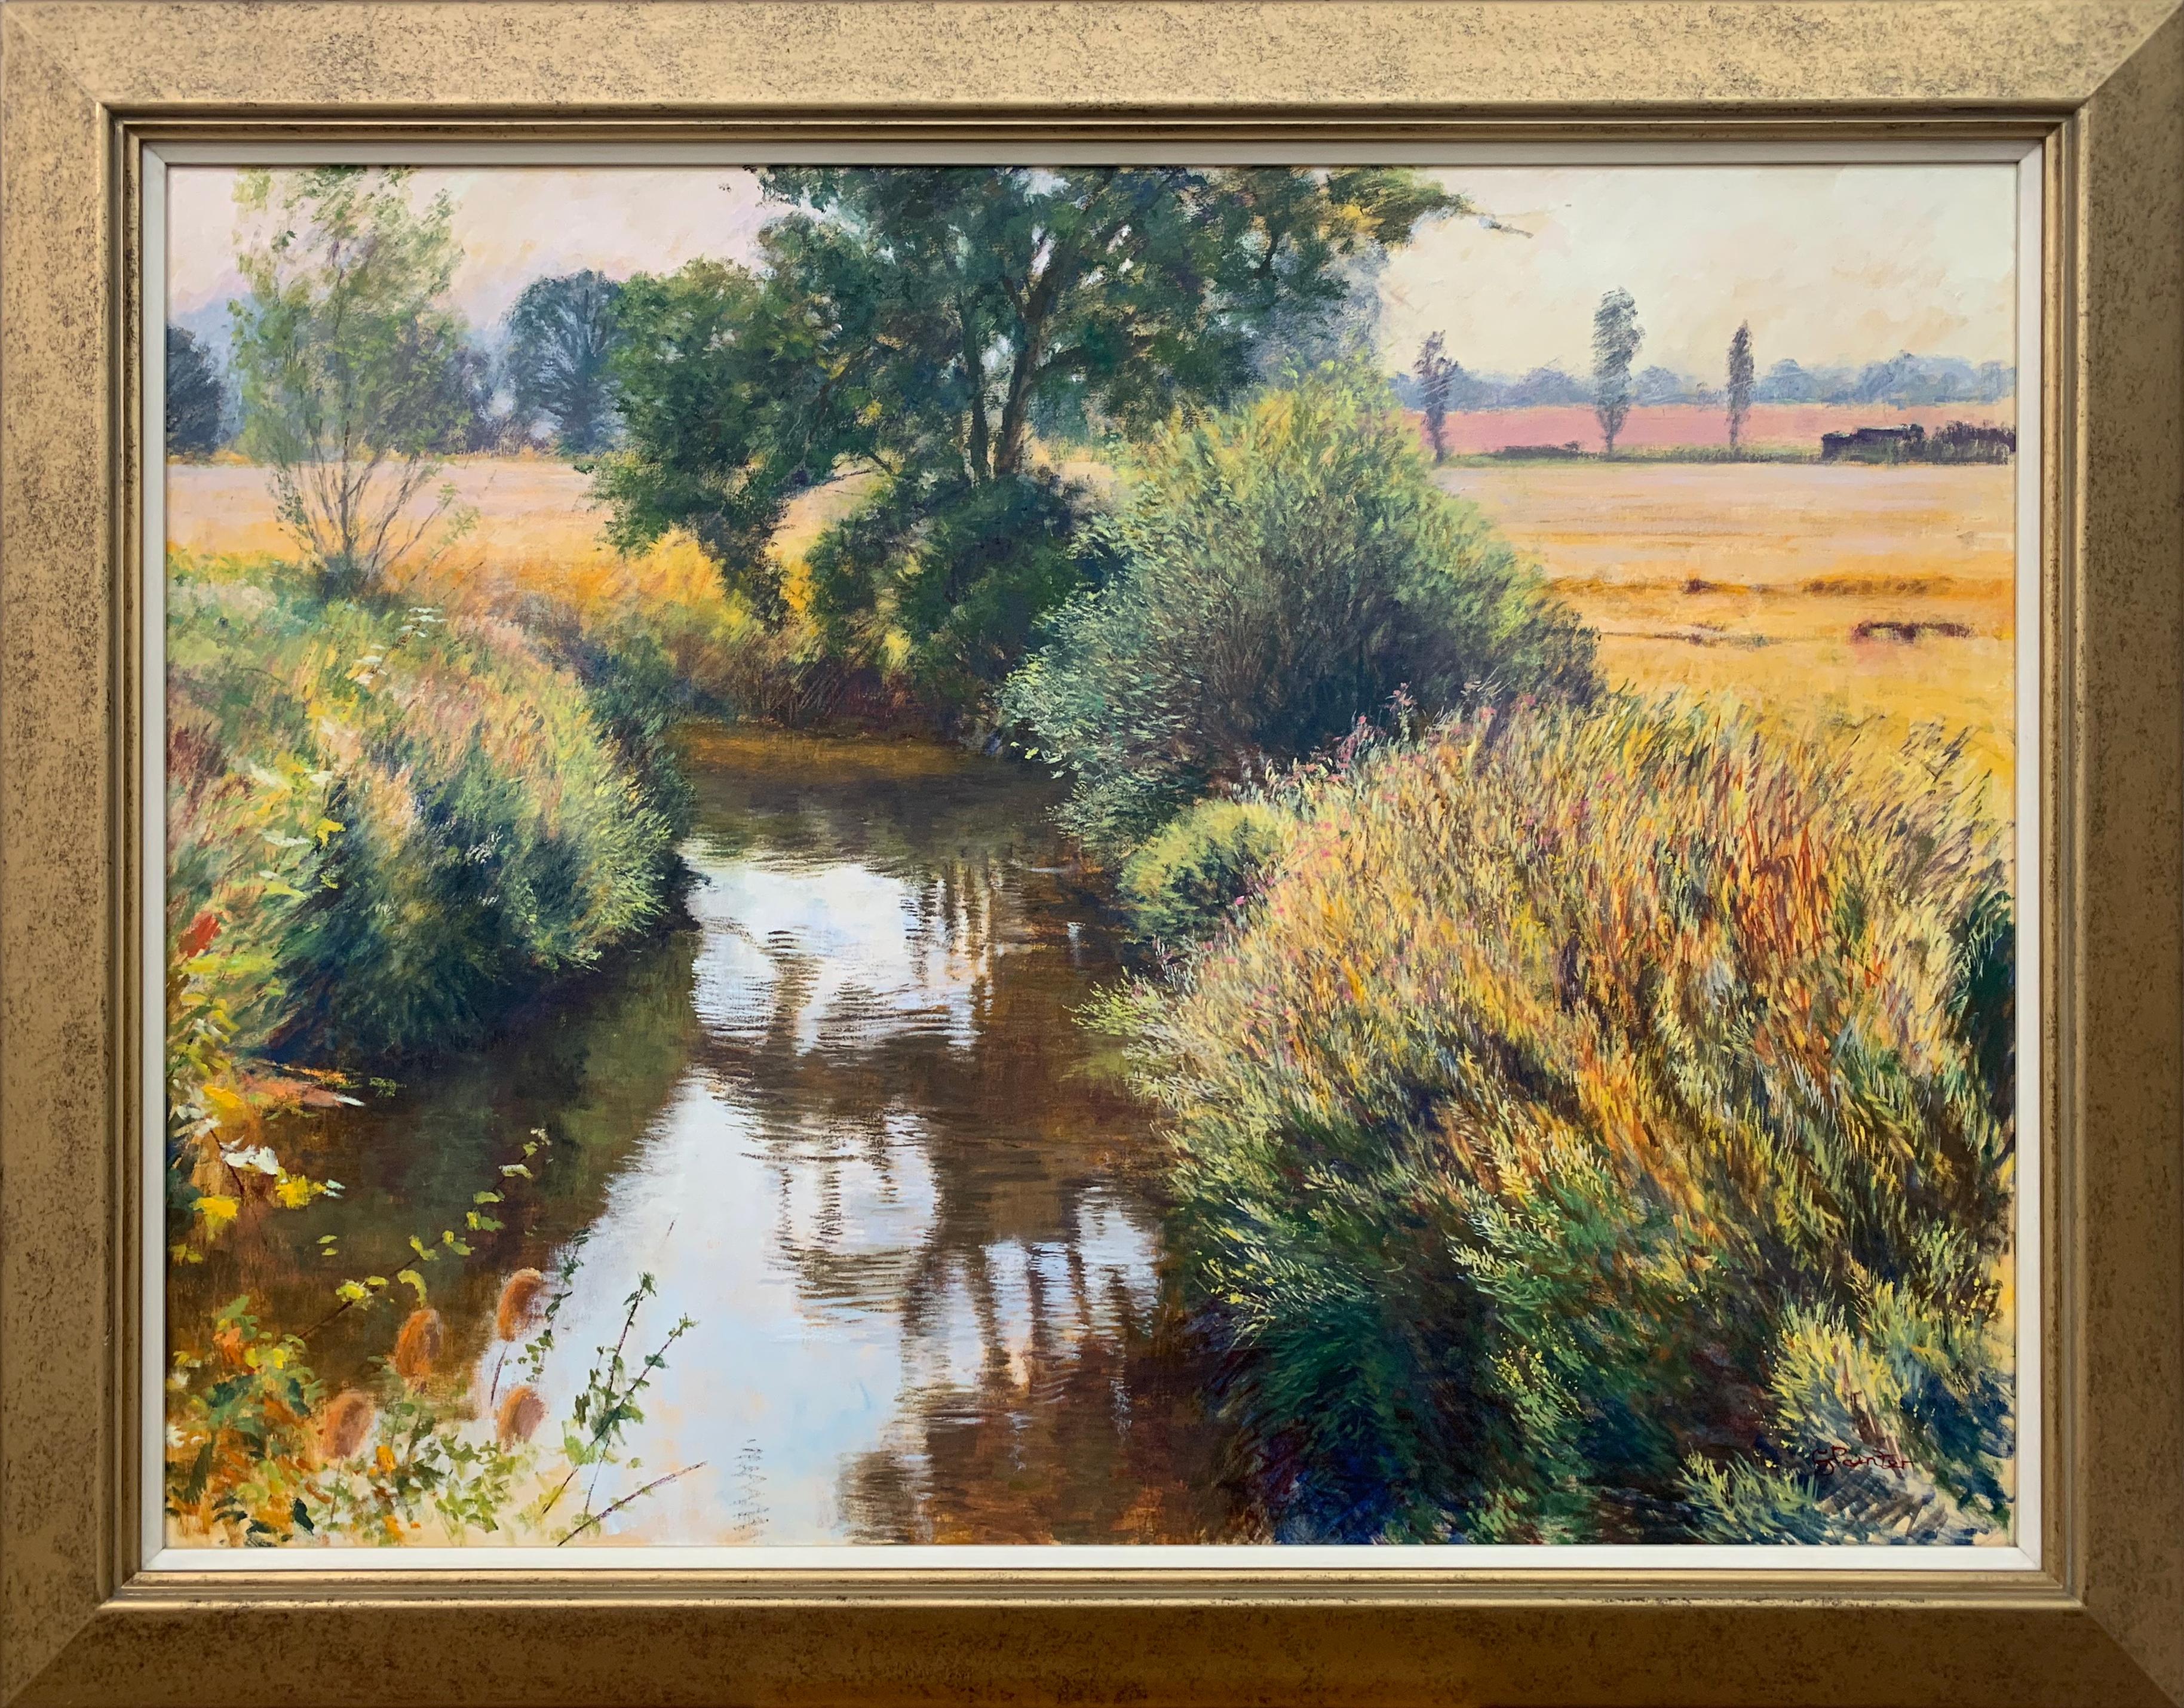 Graham Painter Landscape Painting - English Summer Stream River Landscape Original Oil Painting by British Artist